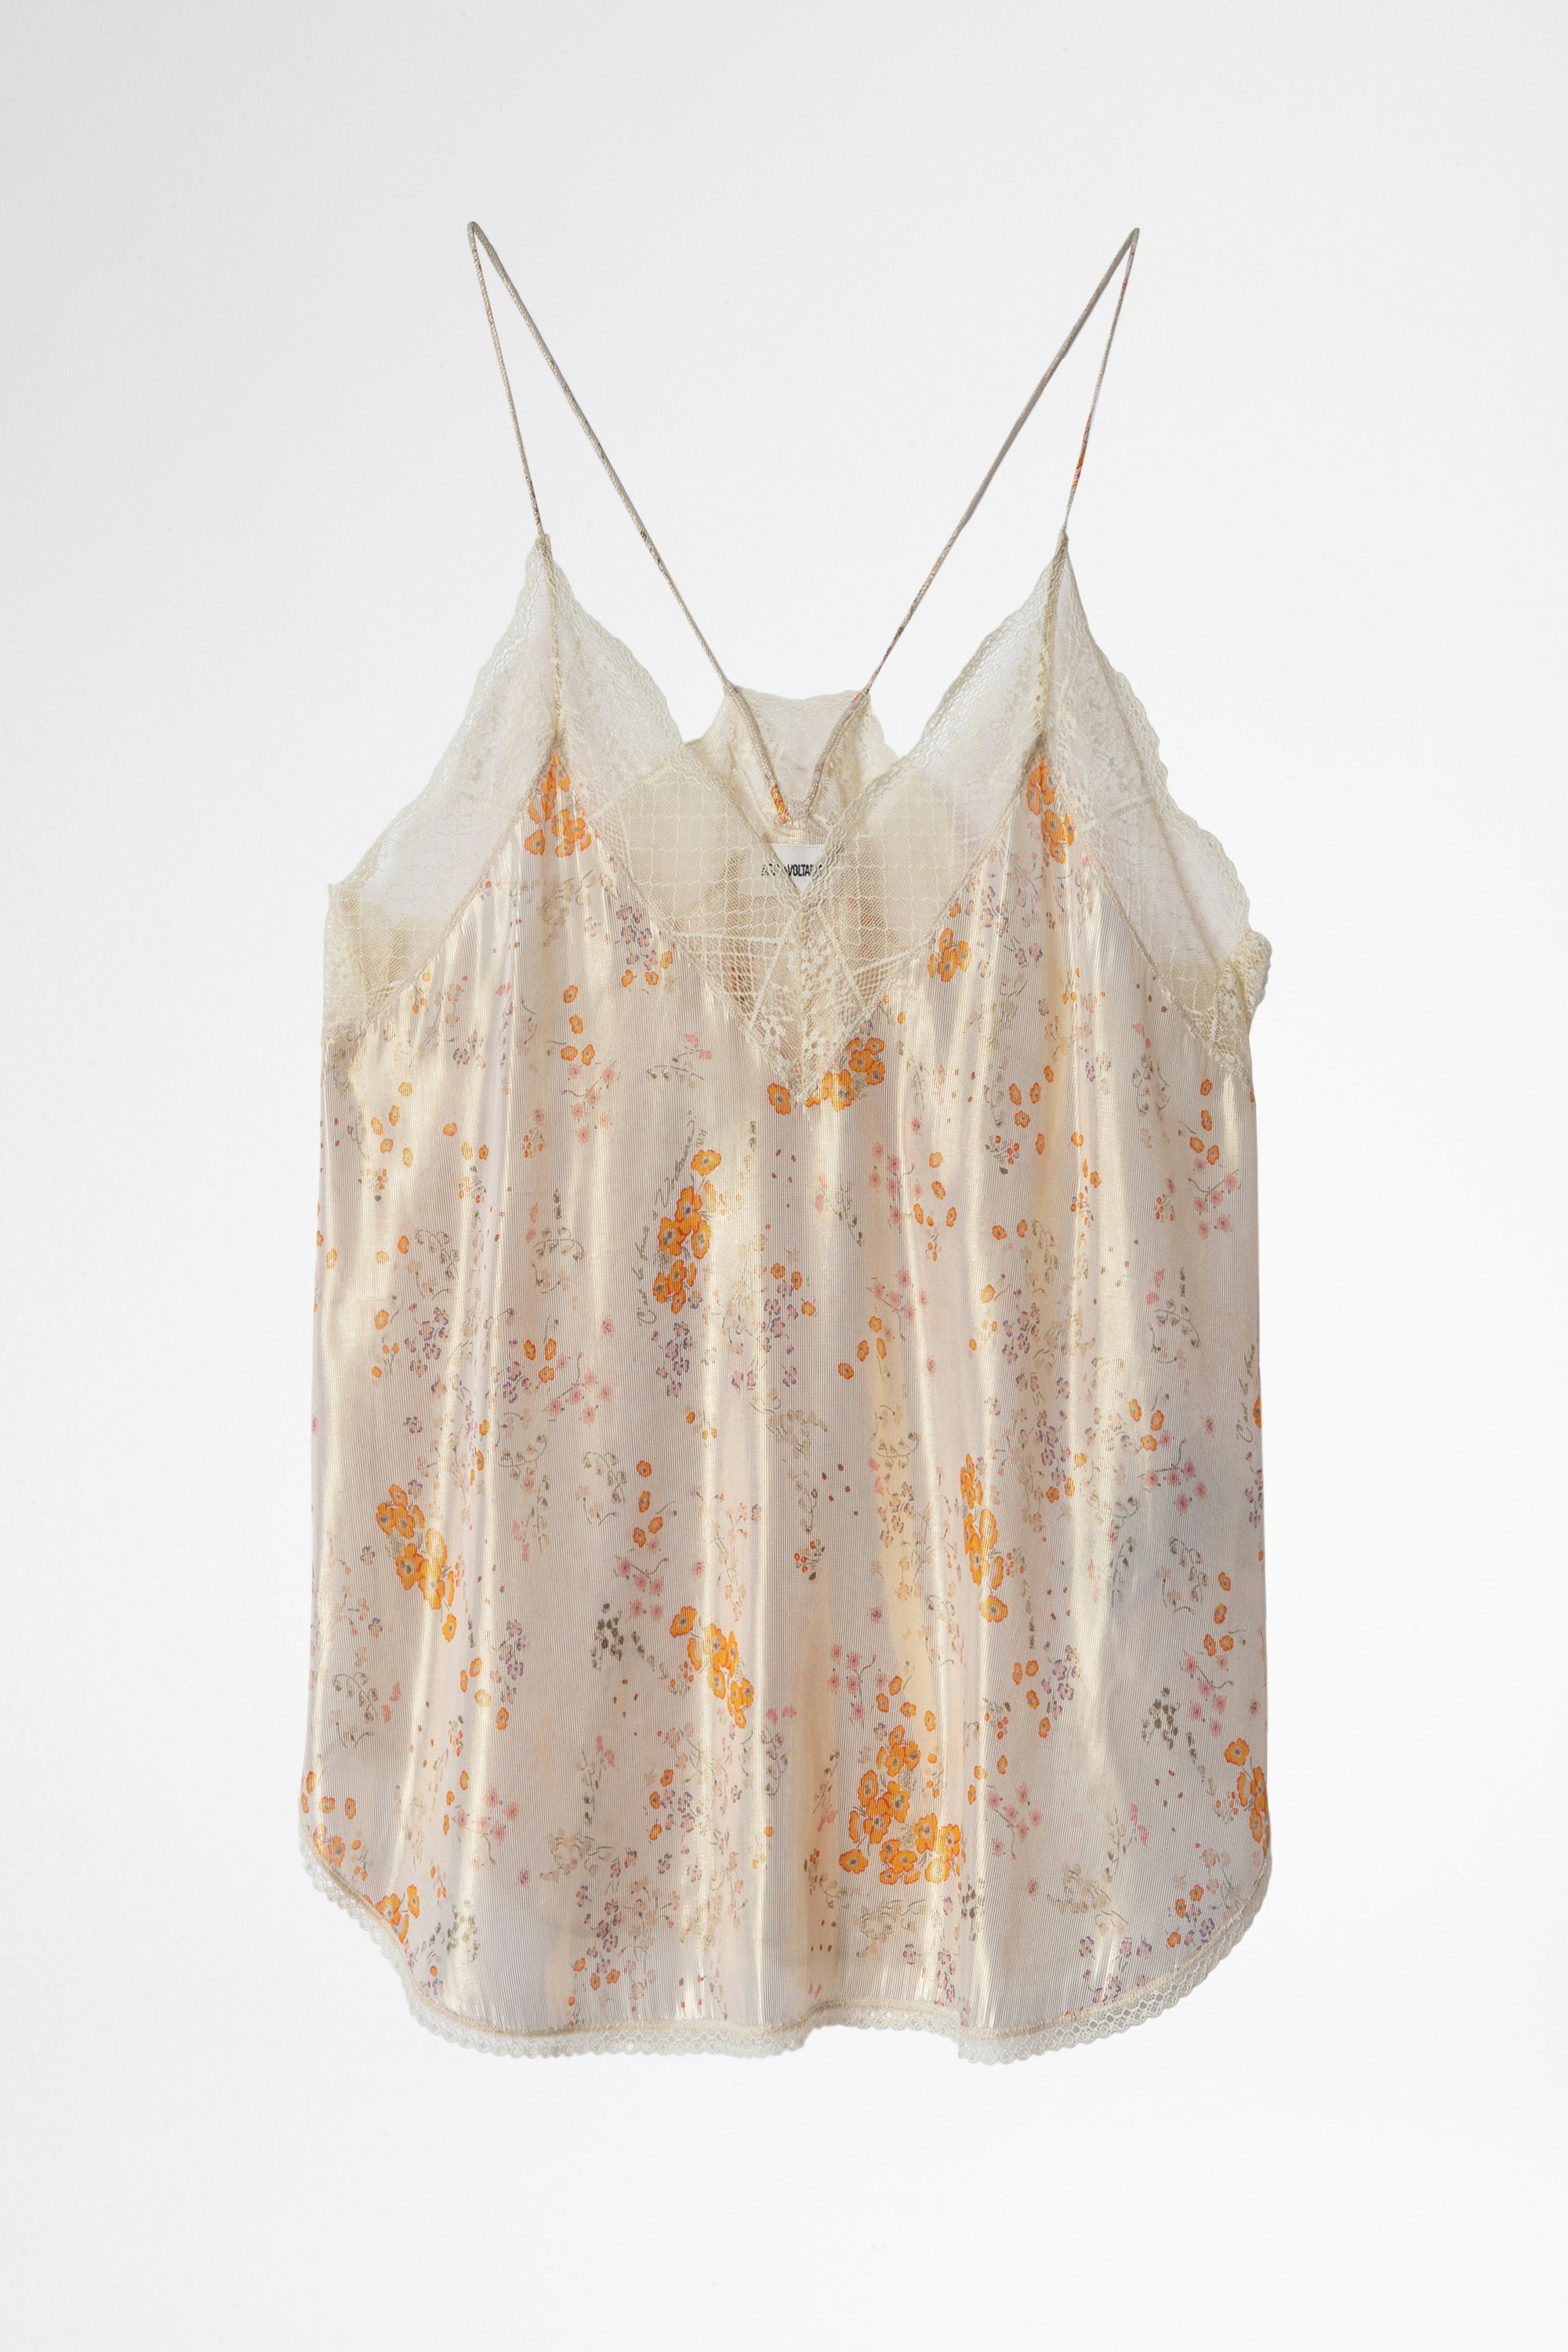 Christy Lame Camisole Women's iridescent beige camisole